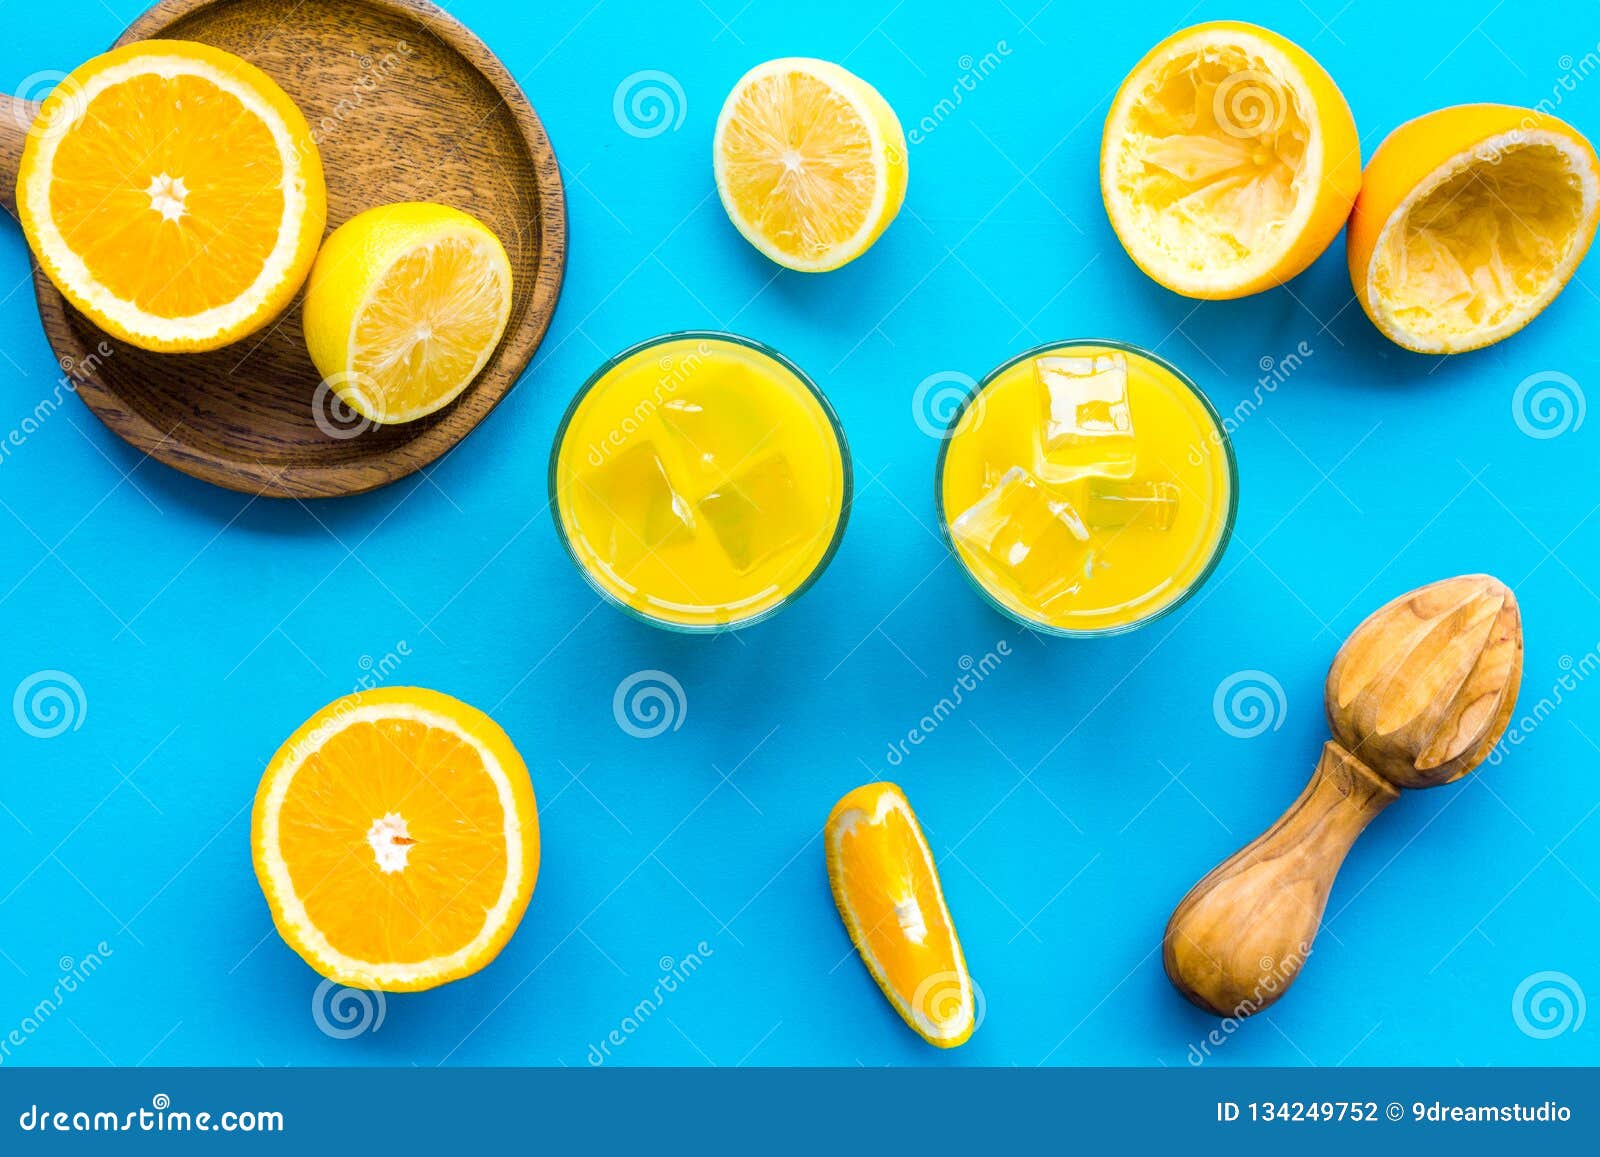 Squeeze Fresh Oranges With Juicer. Orange Juice In Glass Near Half Cut Oranges On Blue ...